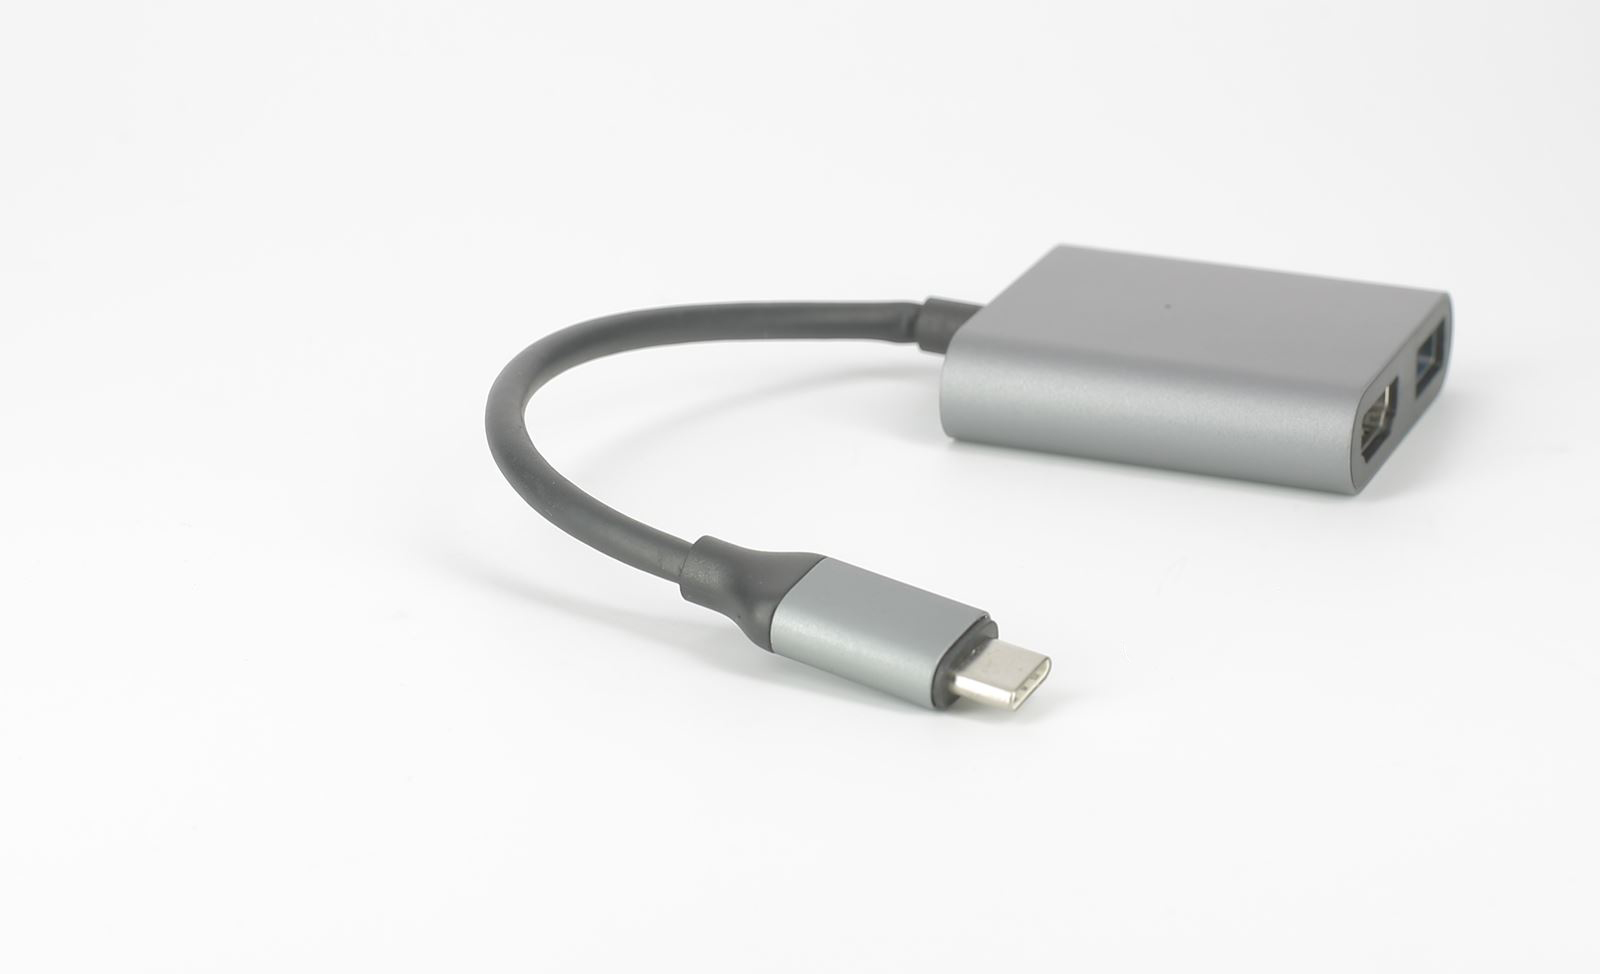 Luxorparts Adapter USB-C till HDMI - HDMI-signalomvandlare